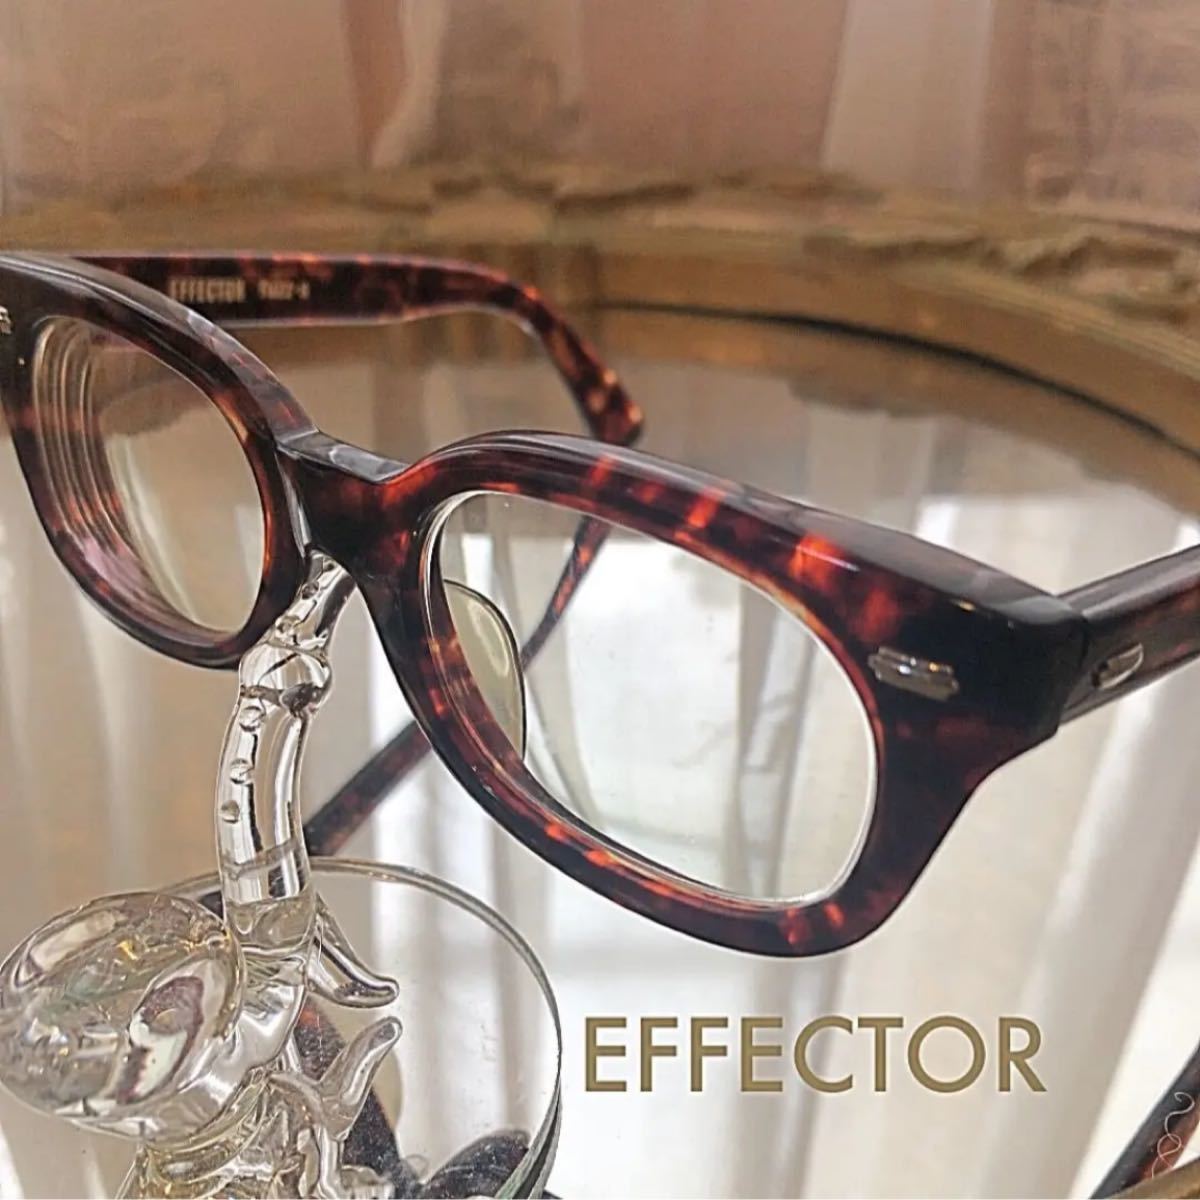 ◆ EFEECTOR FUZZ- S  エフェクター お洒落な鼈甲調 綺麗な品格のある素敵な眼鏡レアな鼈甲調で幅広い年代に人気